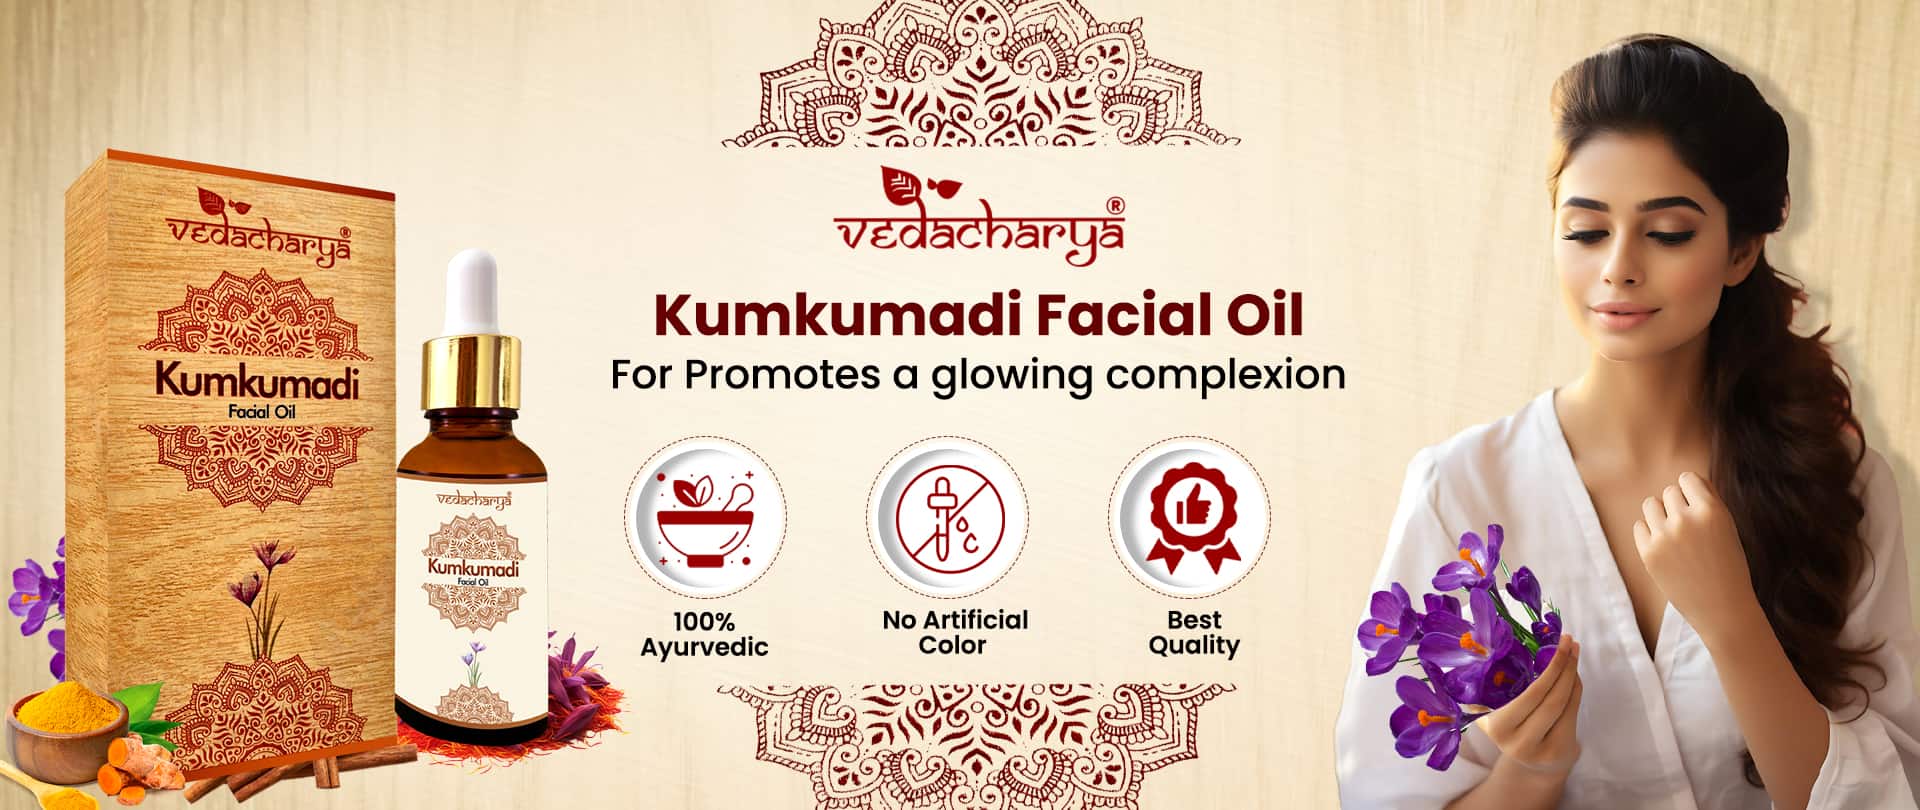 Vedacharya Kumkumadi Facial Oil